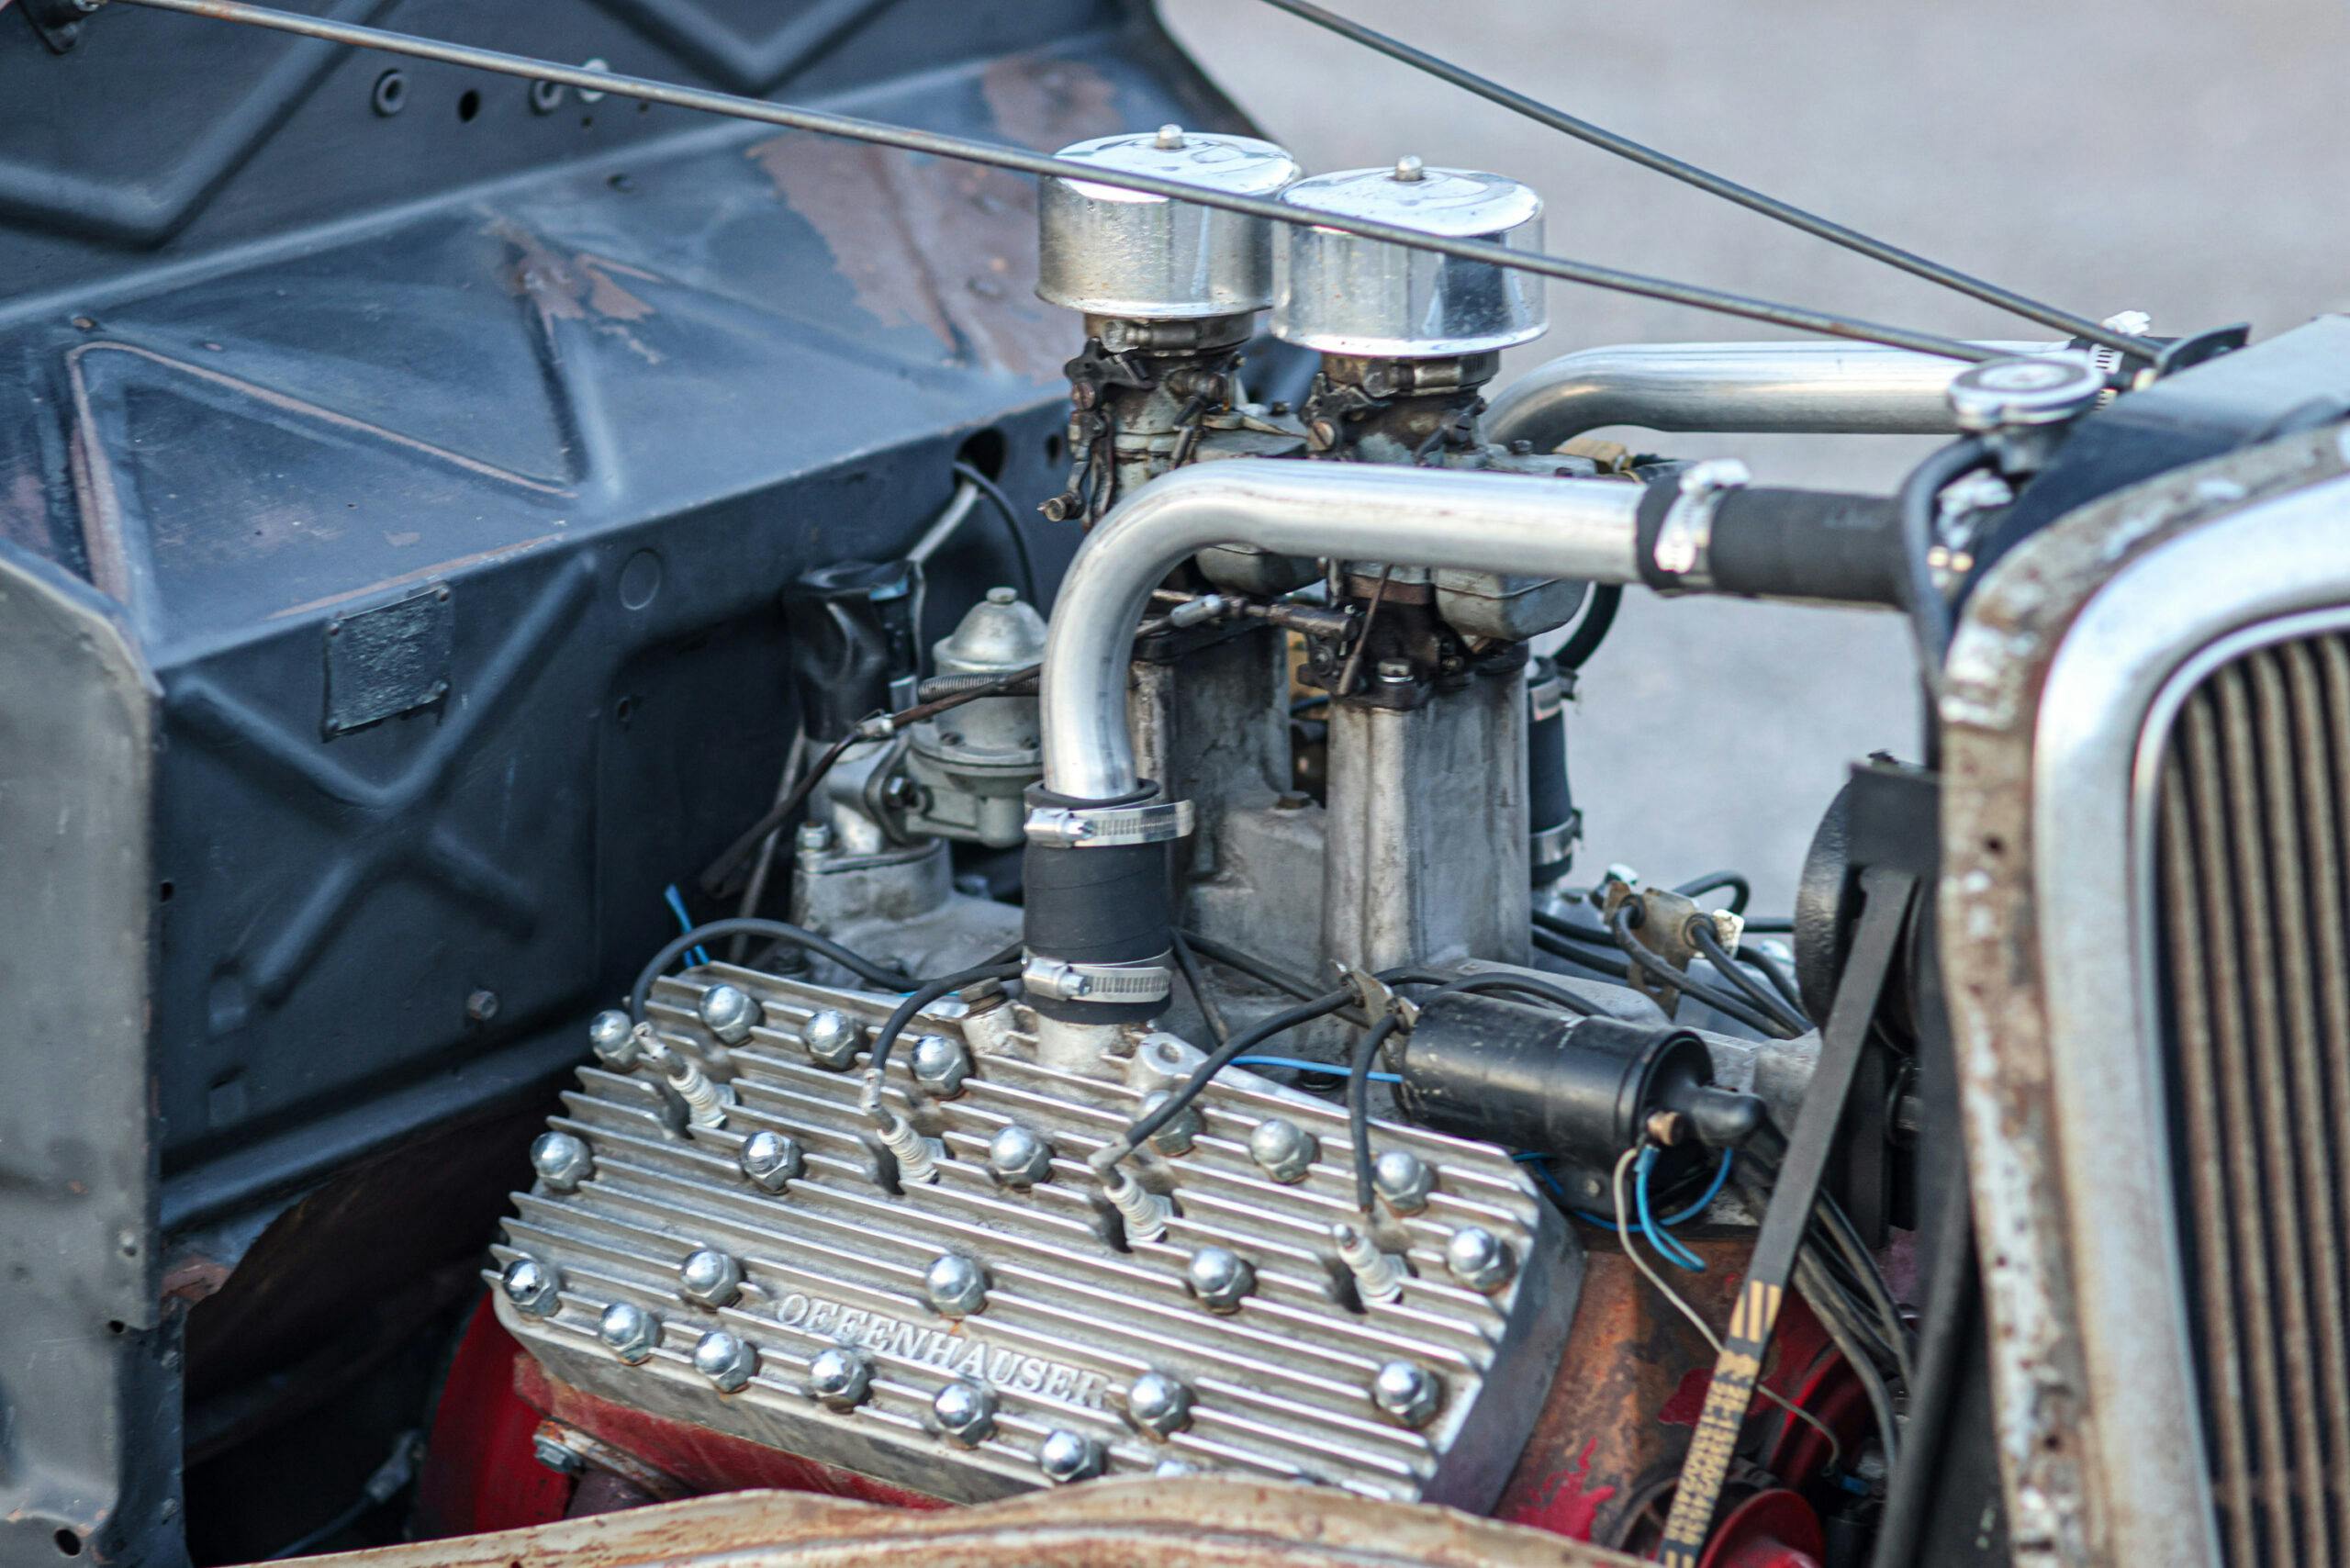 1933-1934 Ford three-window coupe hot rod ford flathead V-8 engine